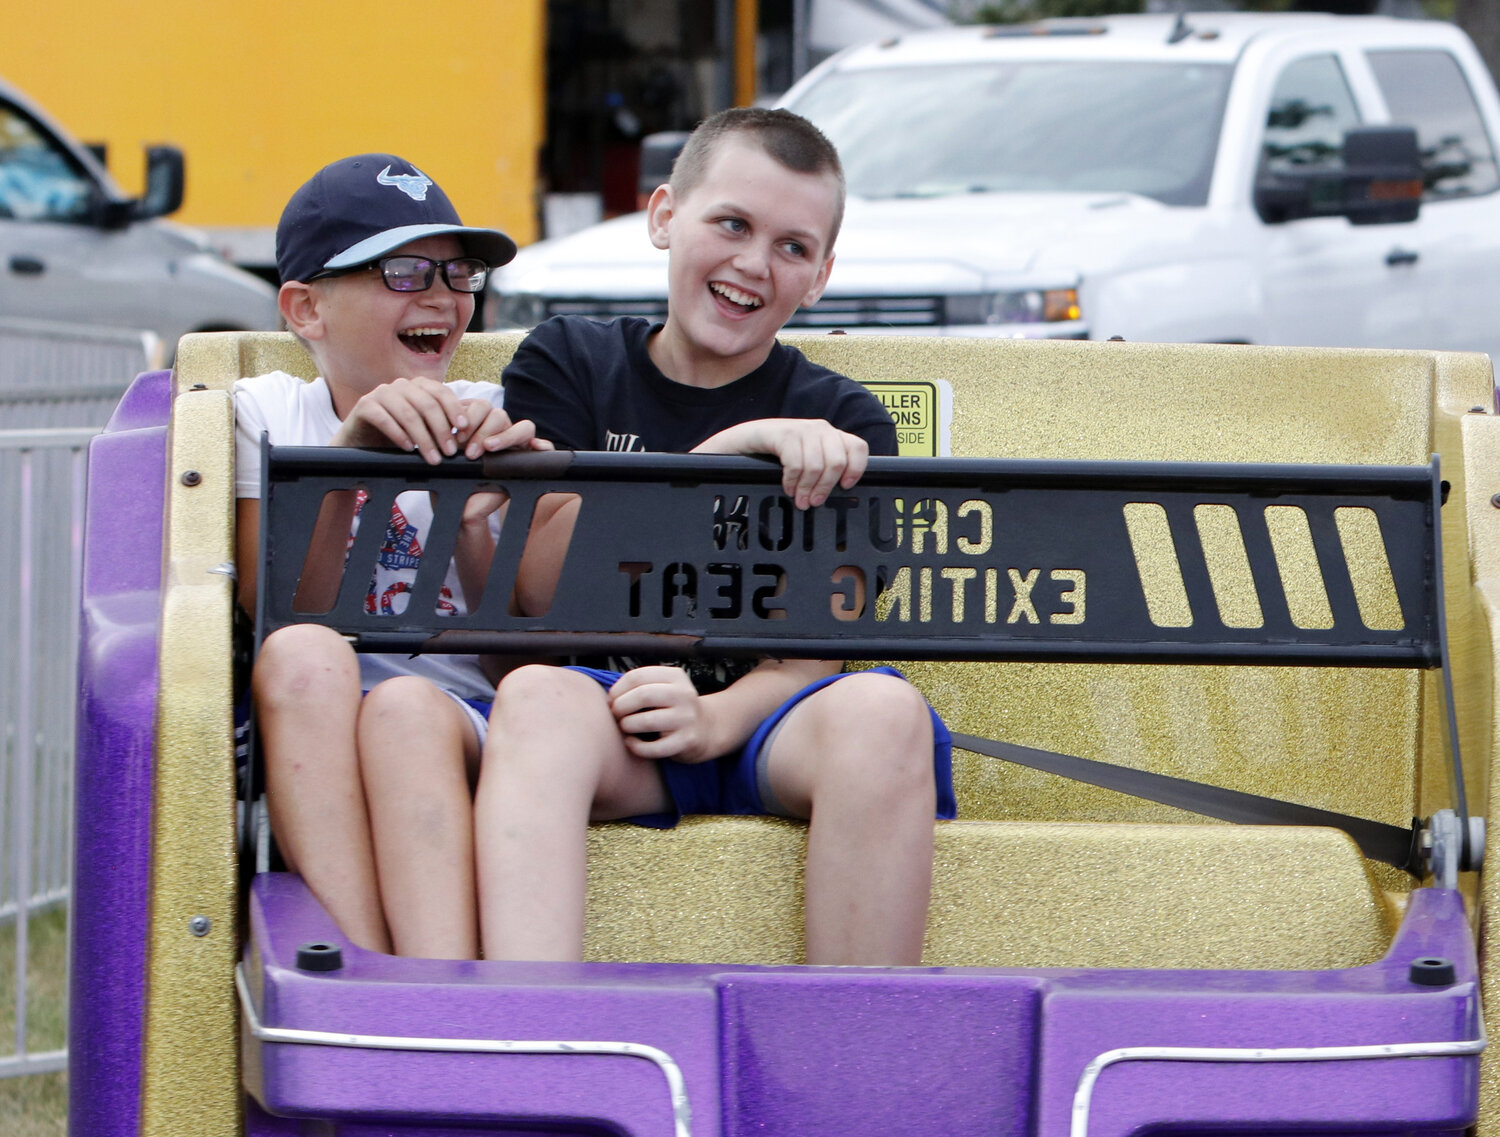 Two kids enjoy the Warren County Fair rides.